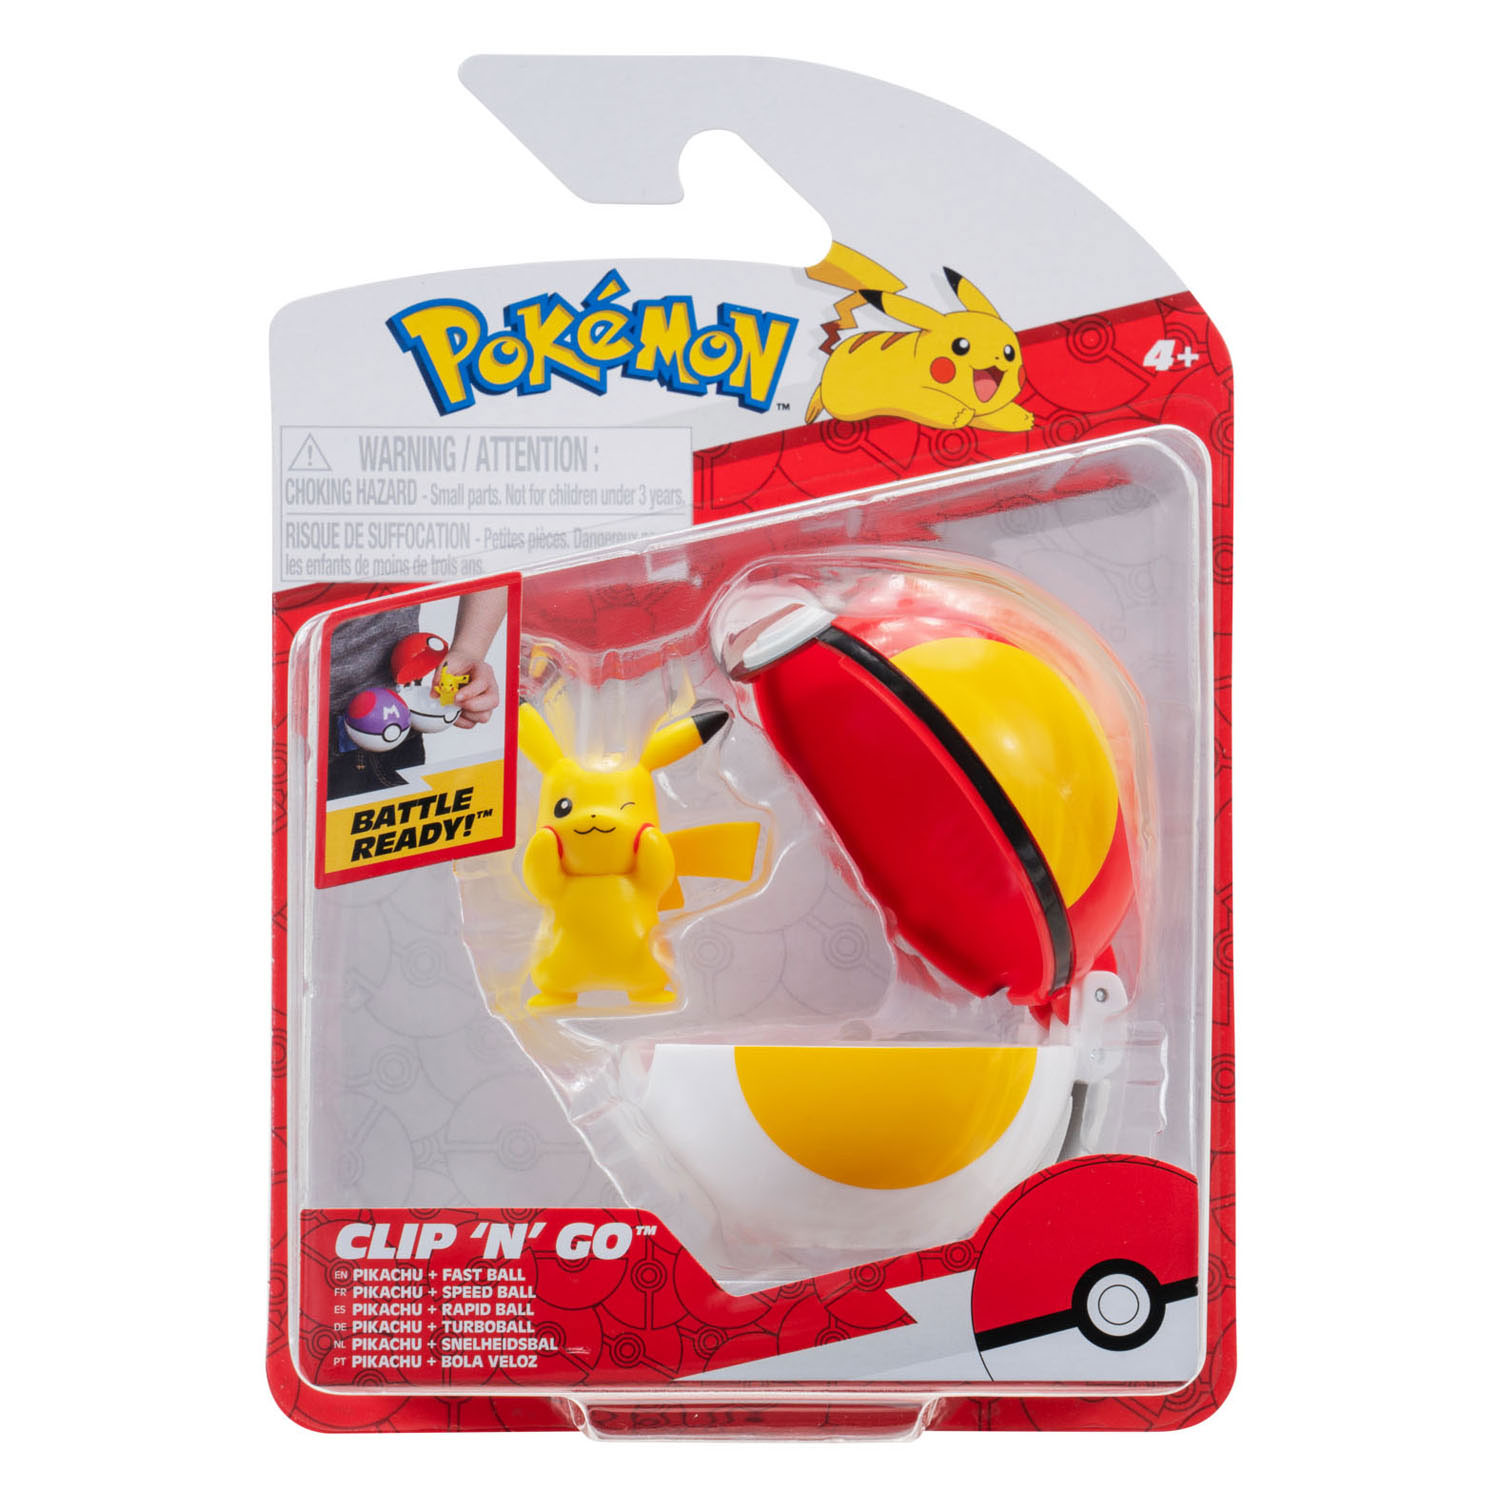 Pokémon Clip 'N' Go Pikachu en Fast Ball Speelset, 2dlg.